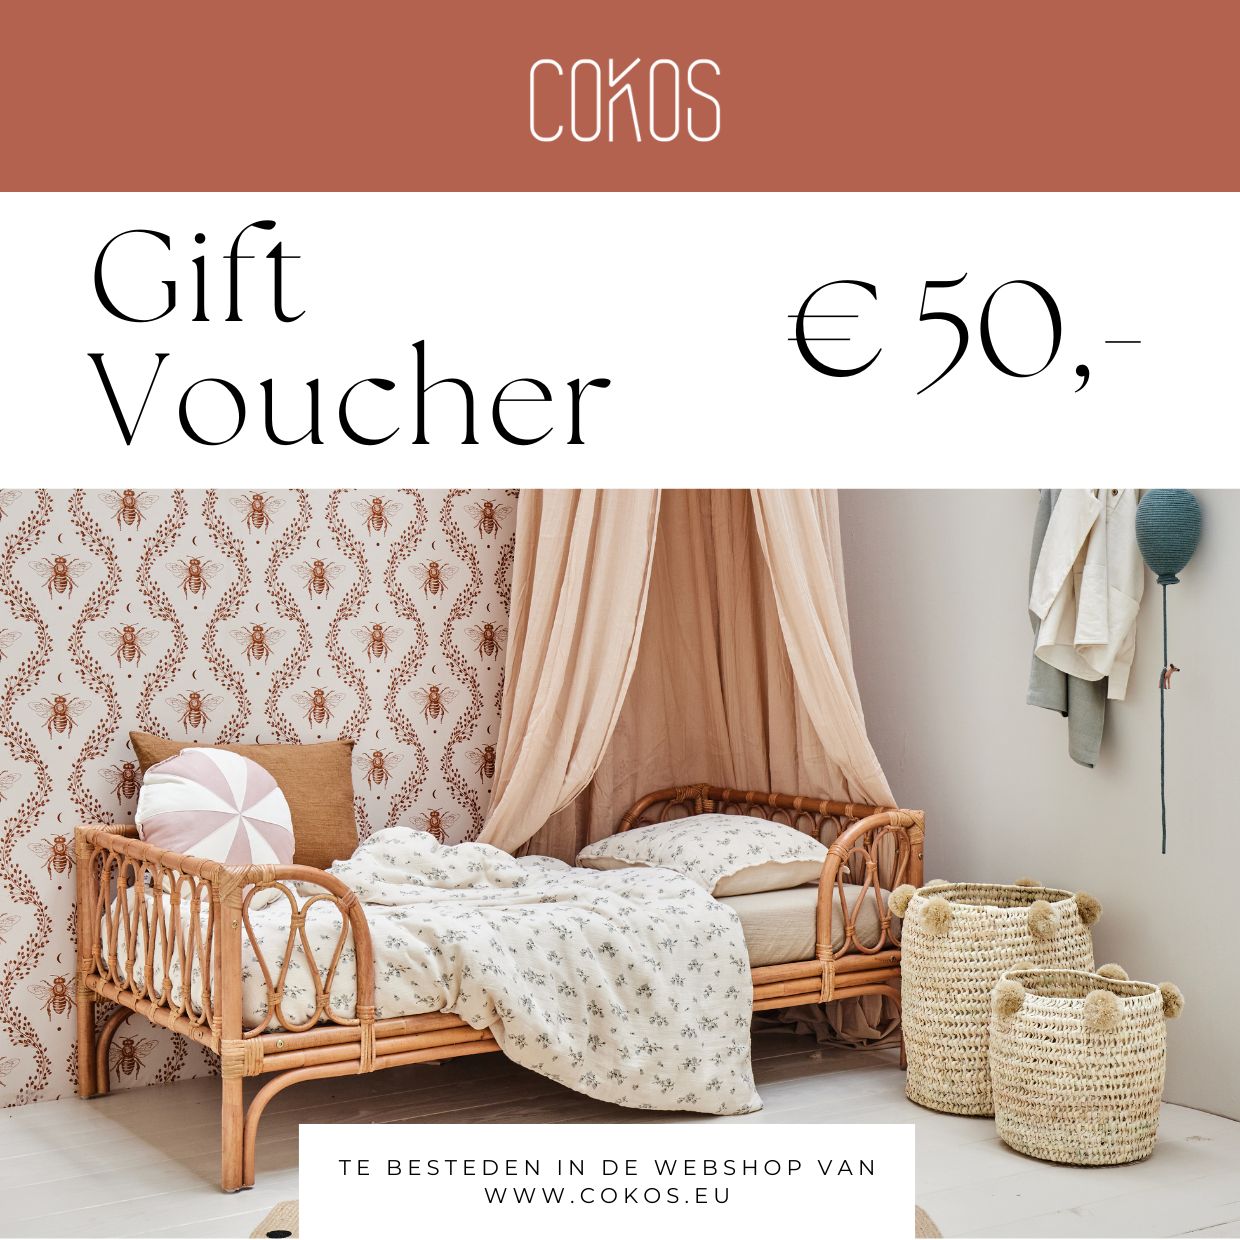 Cokos Gift Voucher